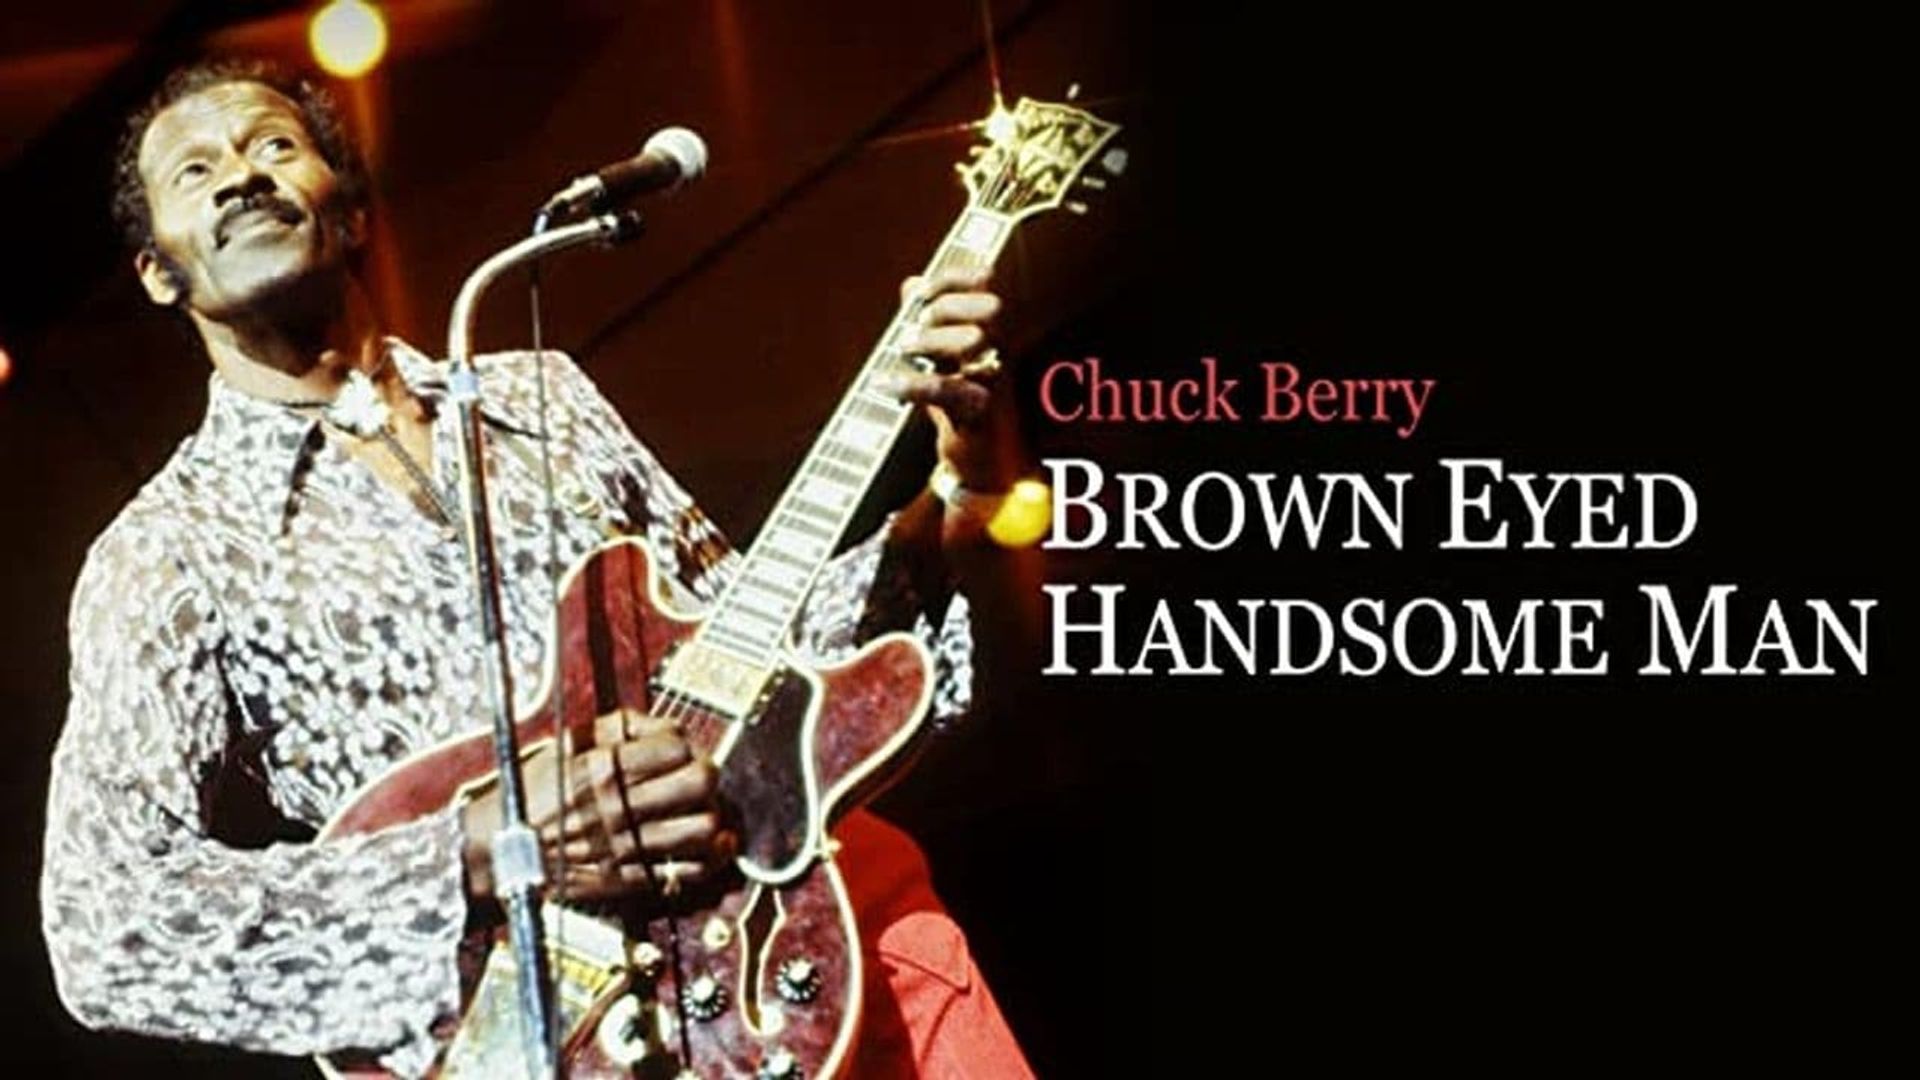 Chuck Berry, Brown-Eyed Handsome Man background